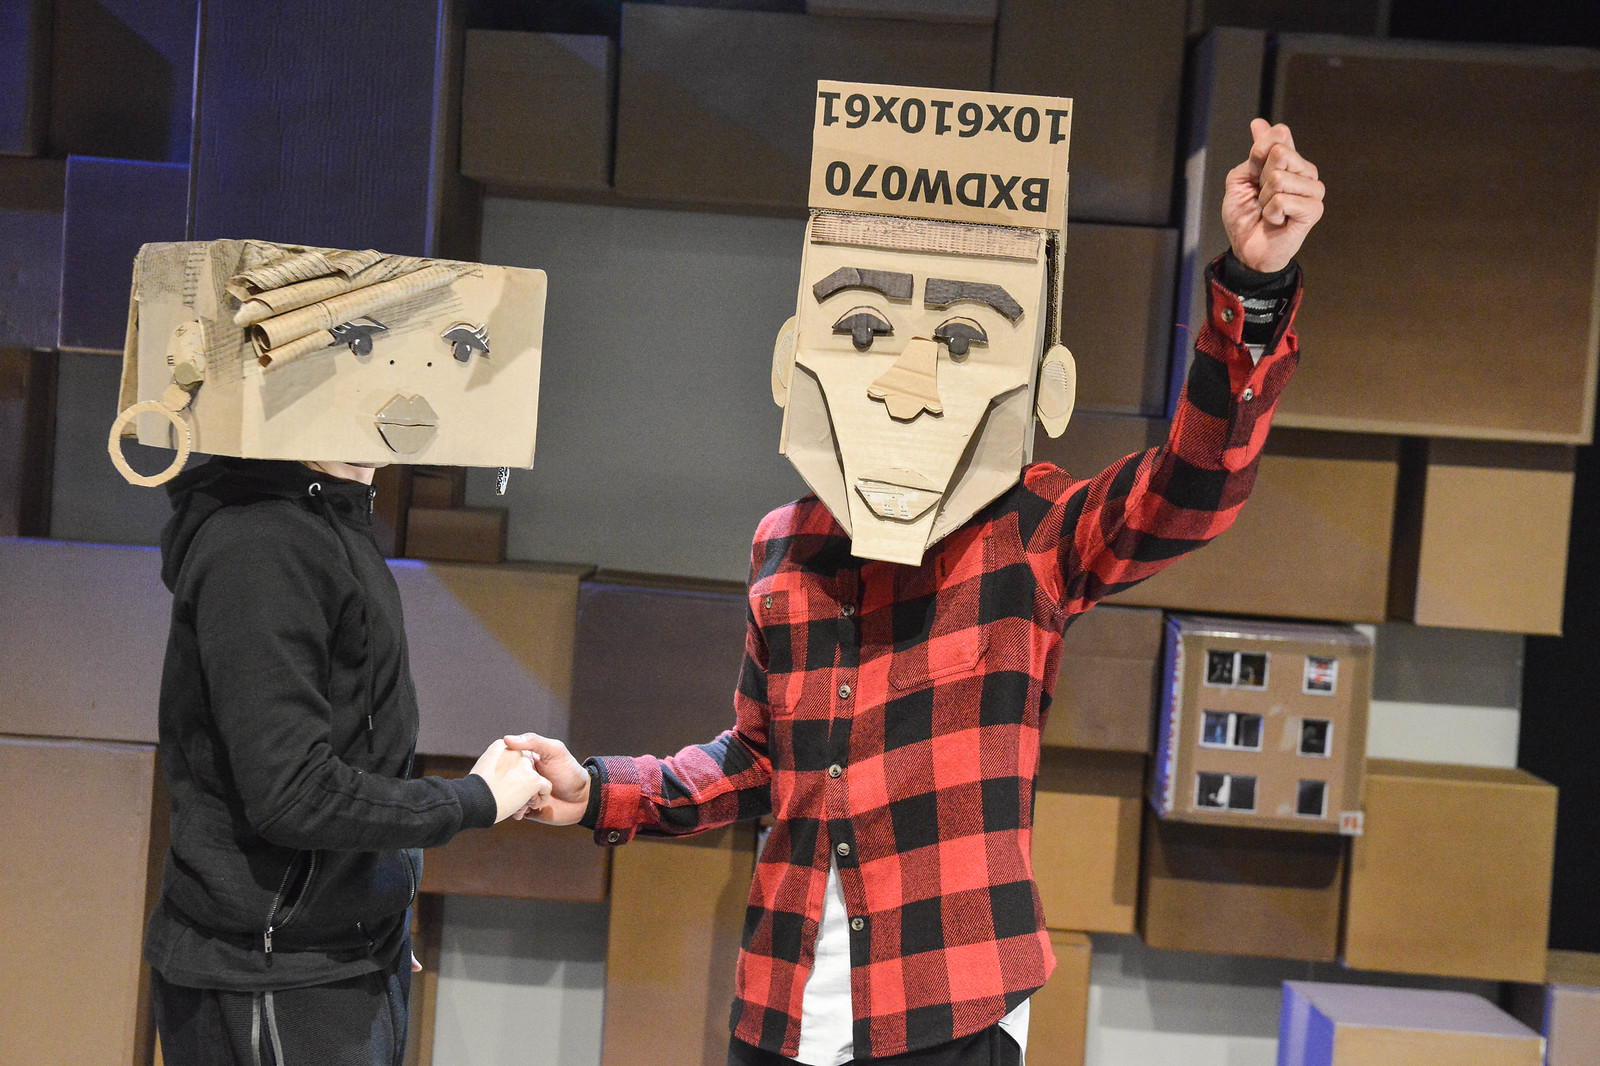 Two people wearing cardboard masks shake hands